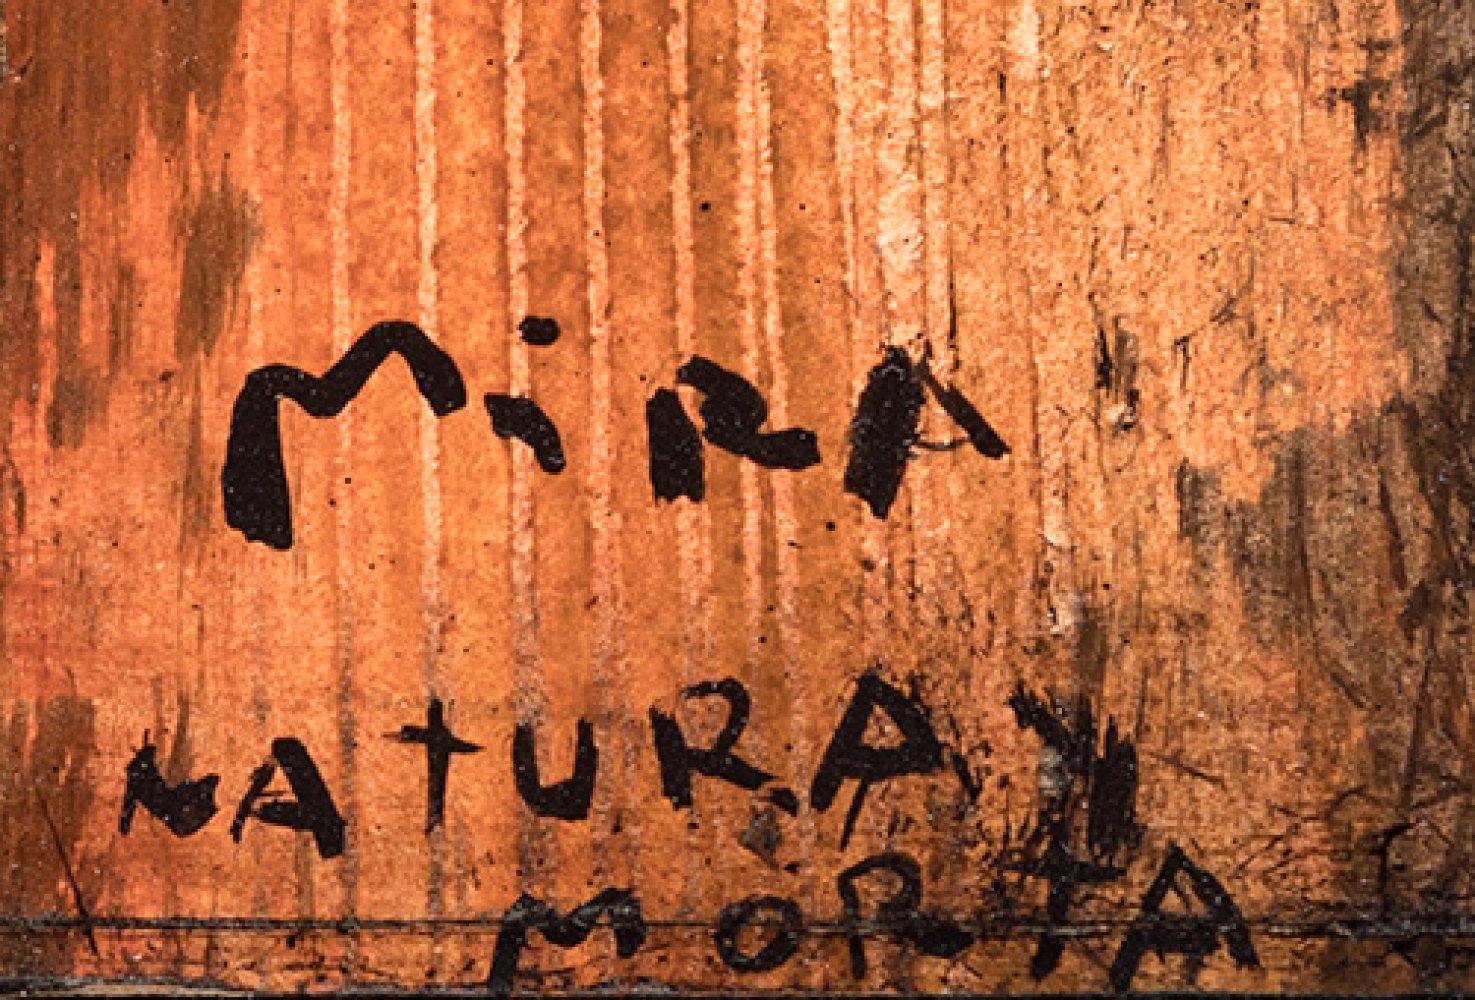 VICTOR MIRA (Zaragoza, 1949 - Munich, 2003)."Natura Morta".Mixed media on paper adhered to wood. - Image 2 of 3